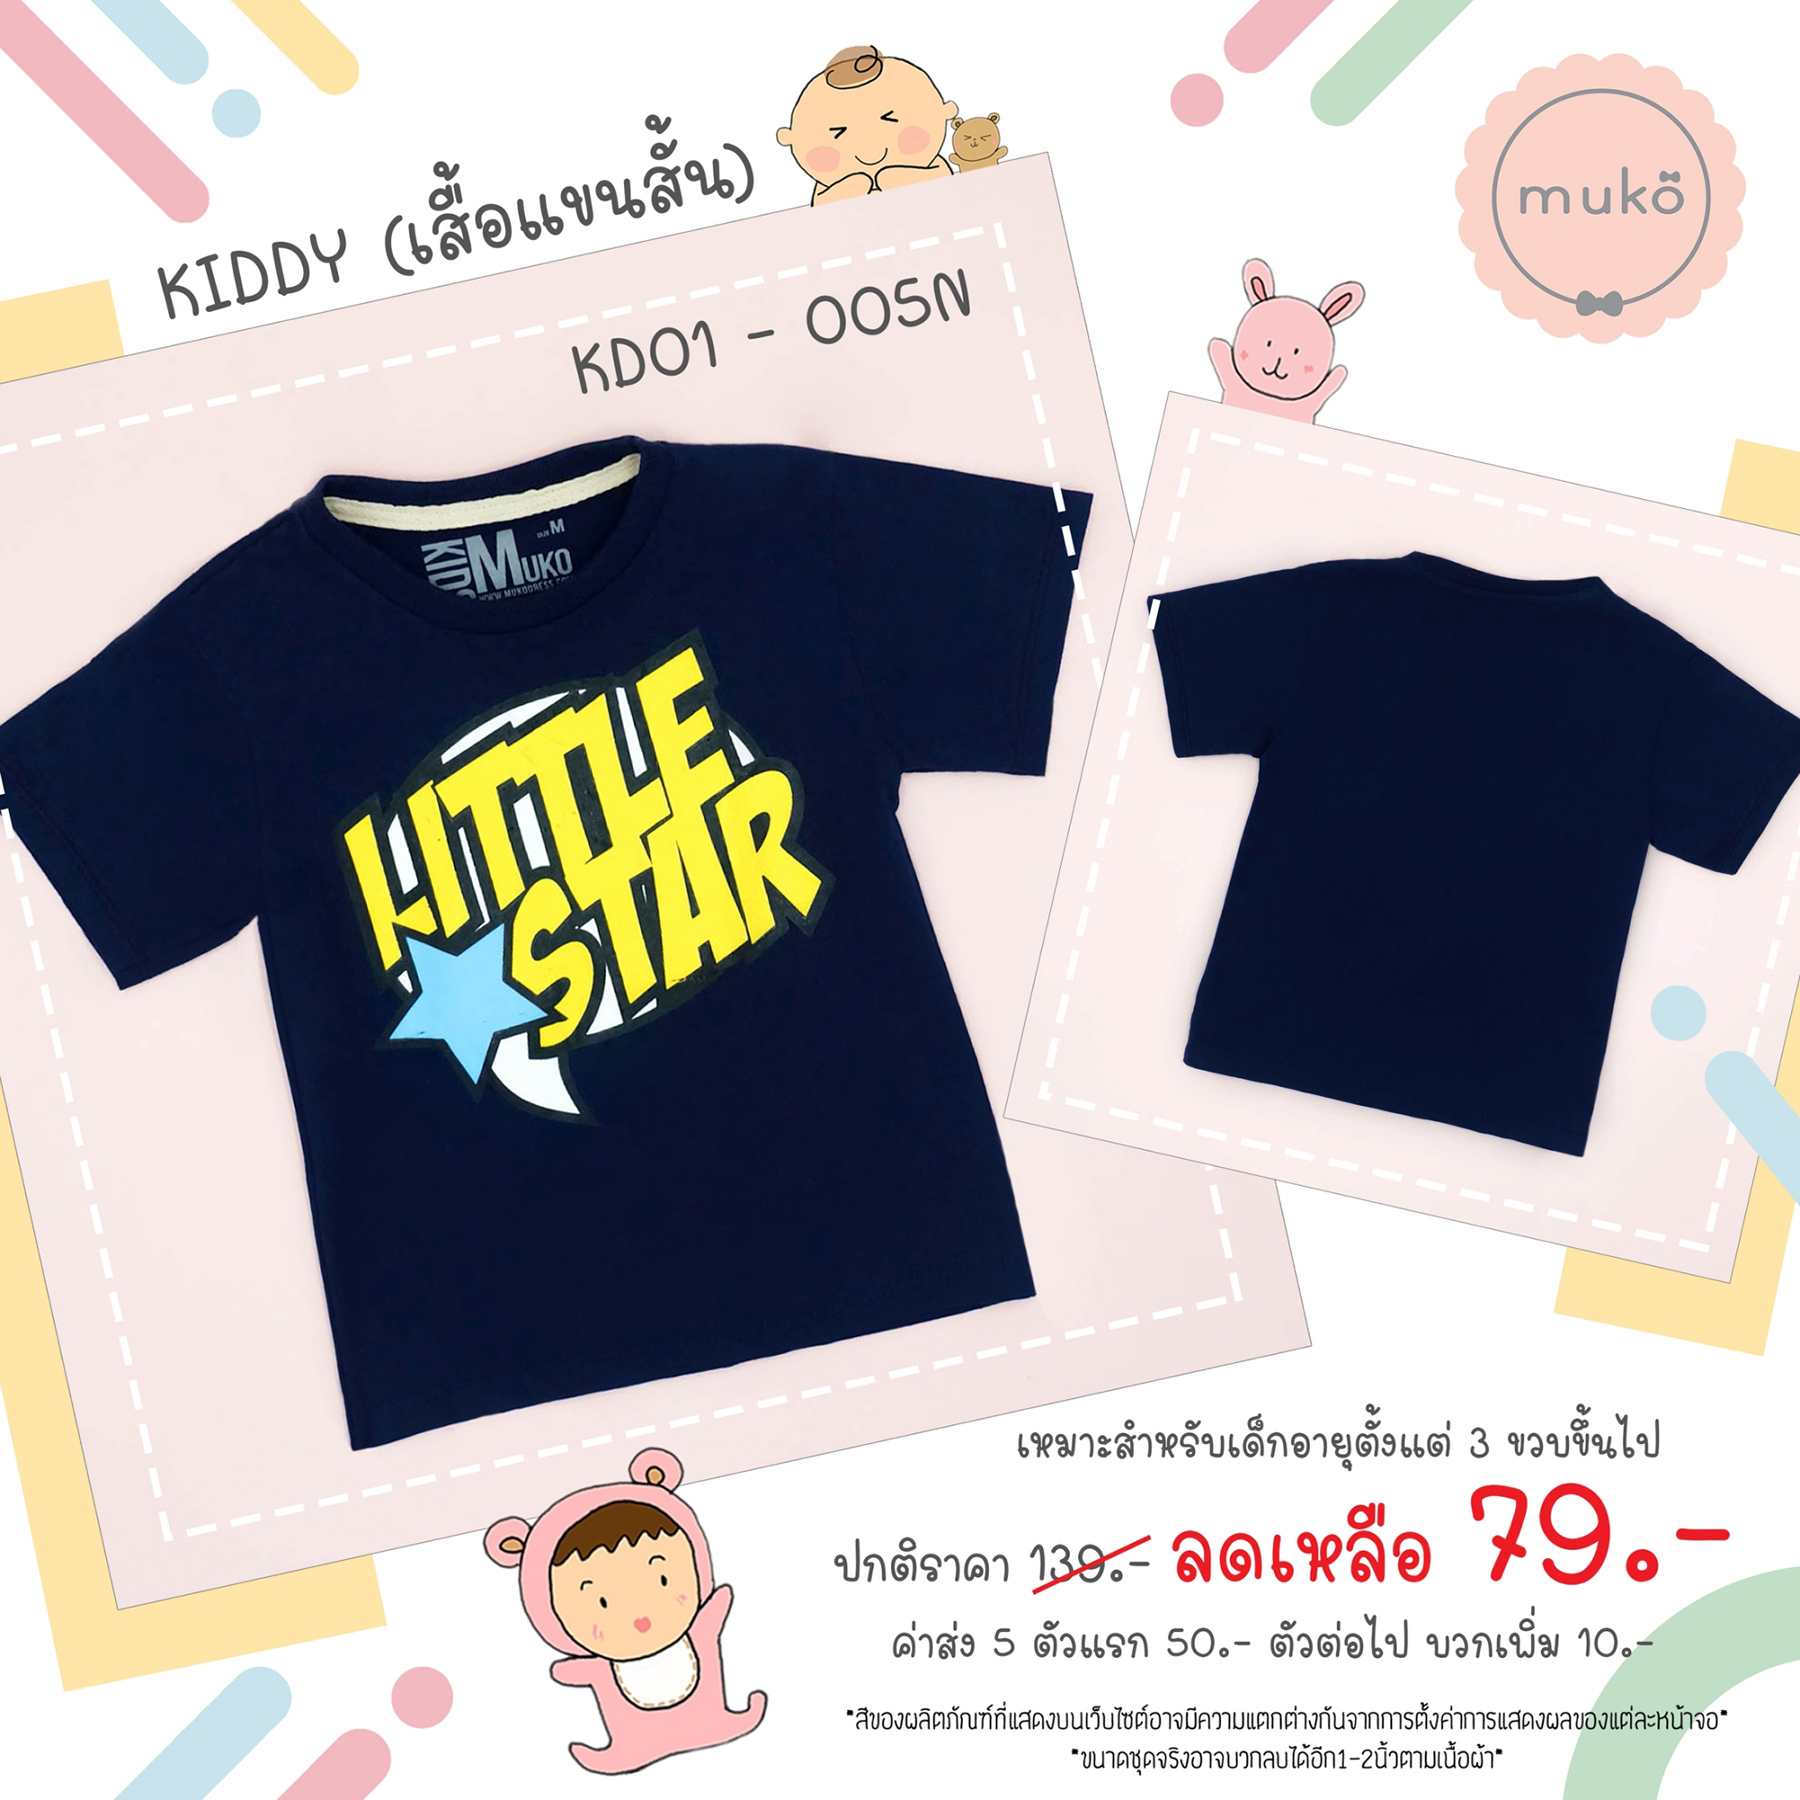 Muko Kiddy เสื้อเด็กเล็ก (แขนสั้น) Size L KD01-005N L ลาย Little Star สีกรม